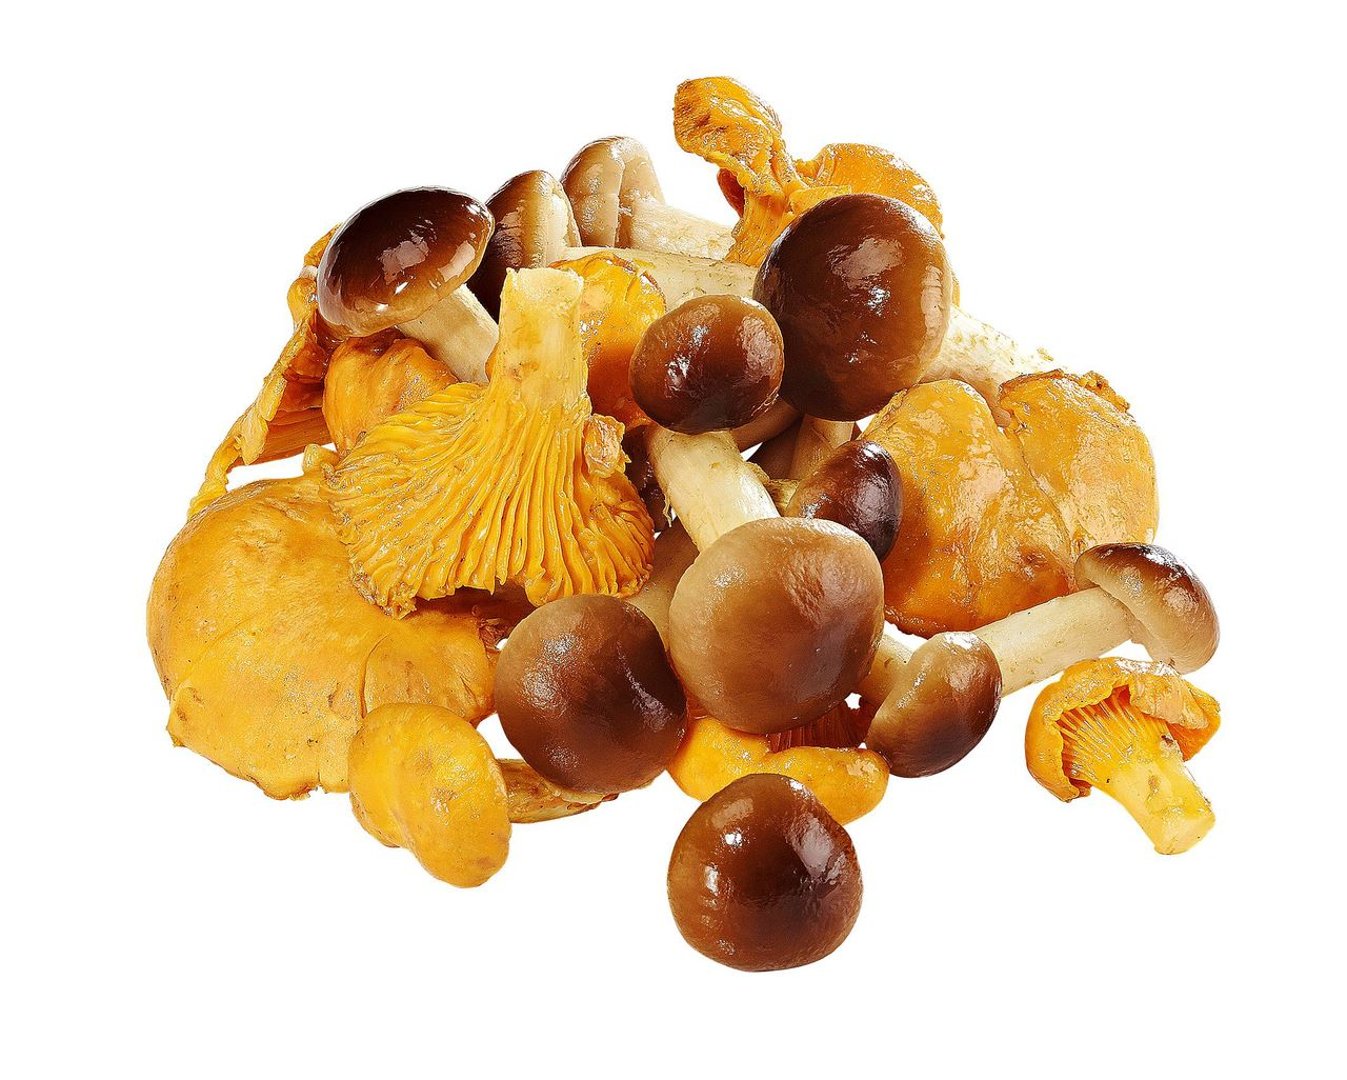 Golden Mushroom - Pfifferlinge/ Stockschwämmchen gemischt tiefgefroren - 1 kg Packung